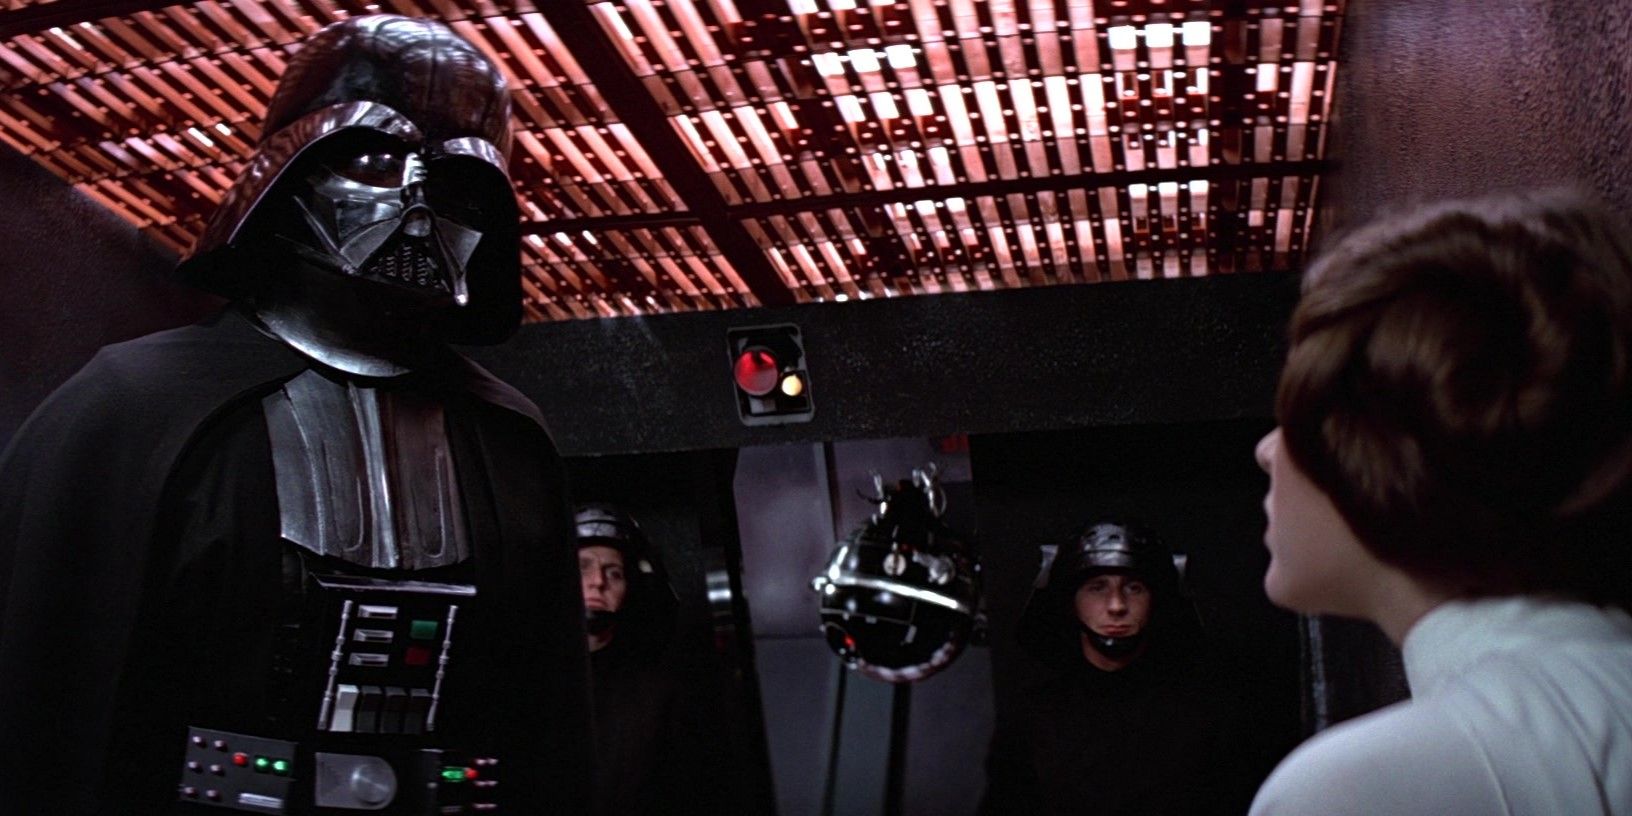 Darth Vader interrogates Princess Leia on the Death Star in Star Wars: Episode IV - A New Hope